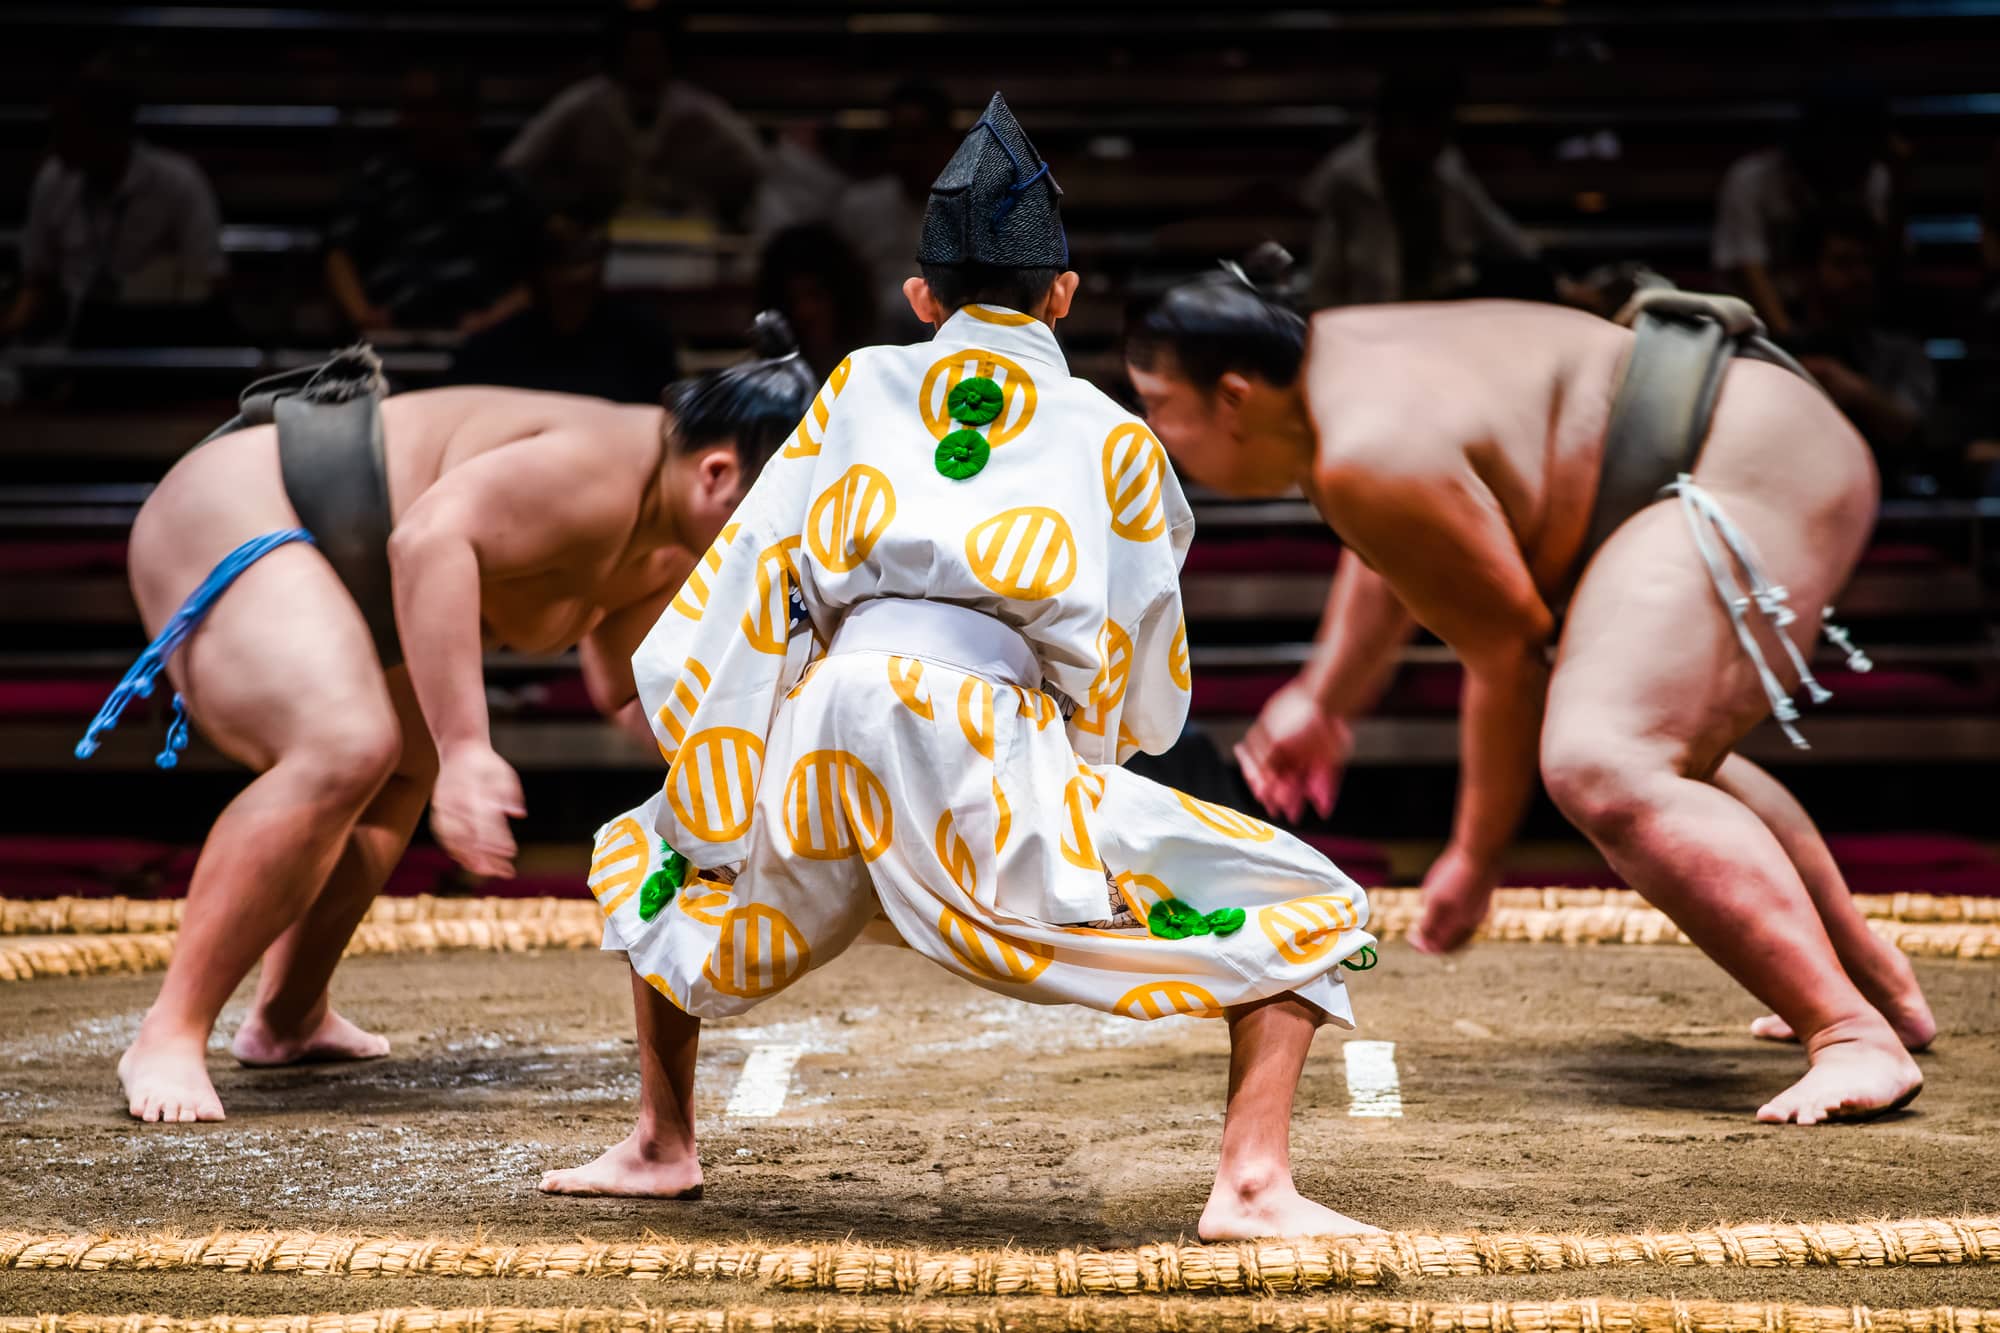 Sumo Wrestling at the Ryogoku Kokugikan